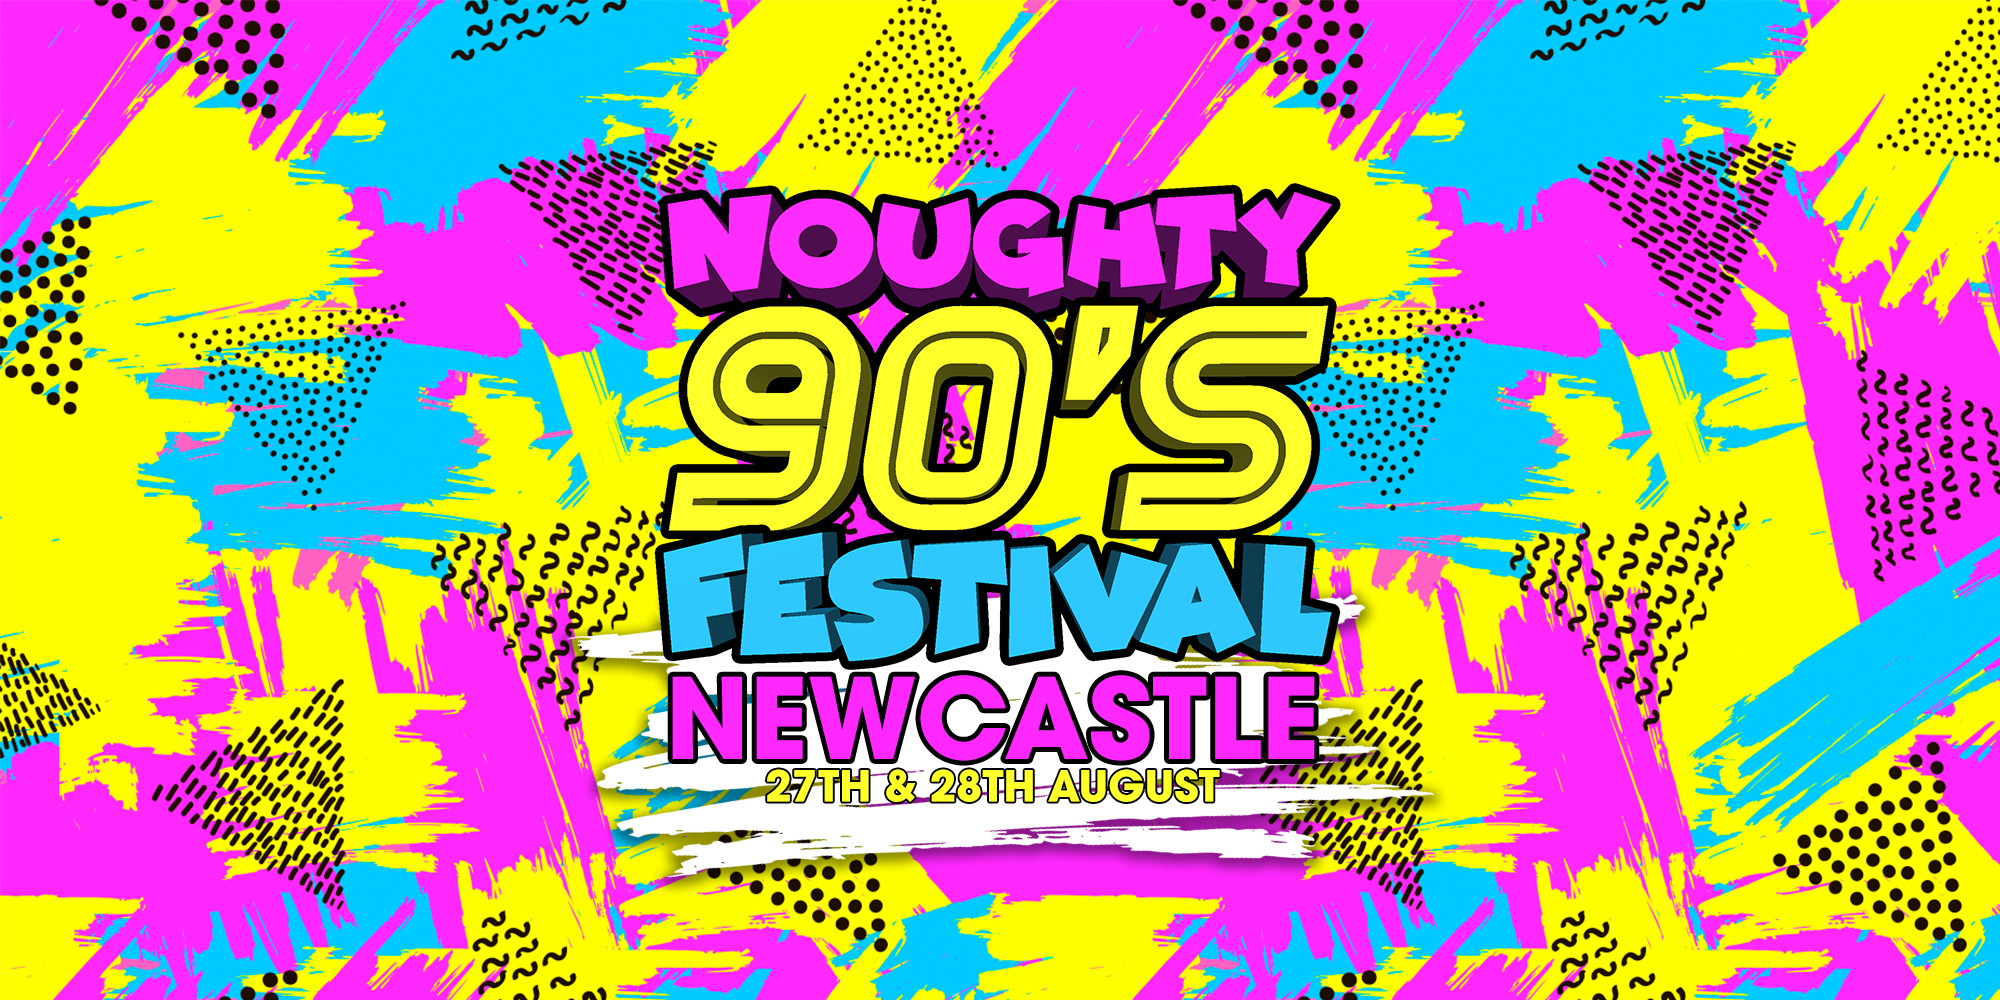 Noughty 90's Festival - Newcastle